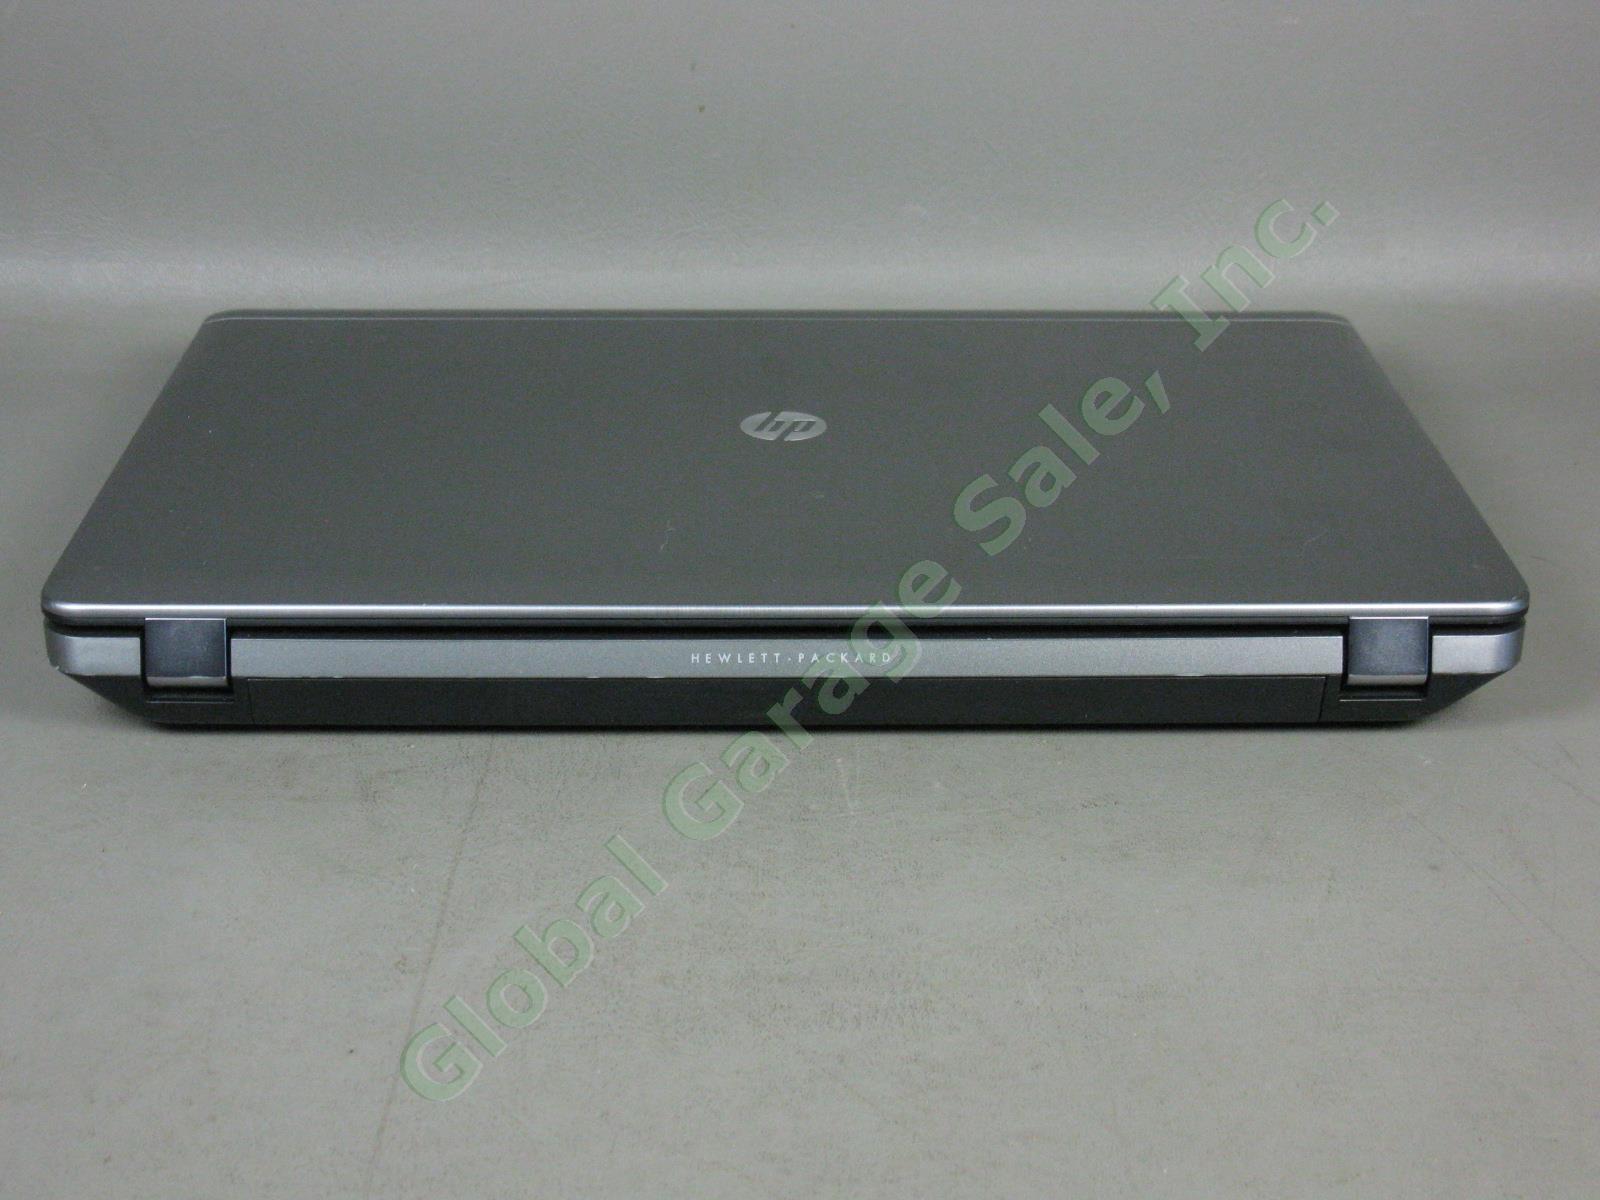 HP ProBook 4540s Laptop Intel i5 2.6GHz 300GB HDD 4GB RAM Win 10 Pro See Descr 6